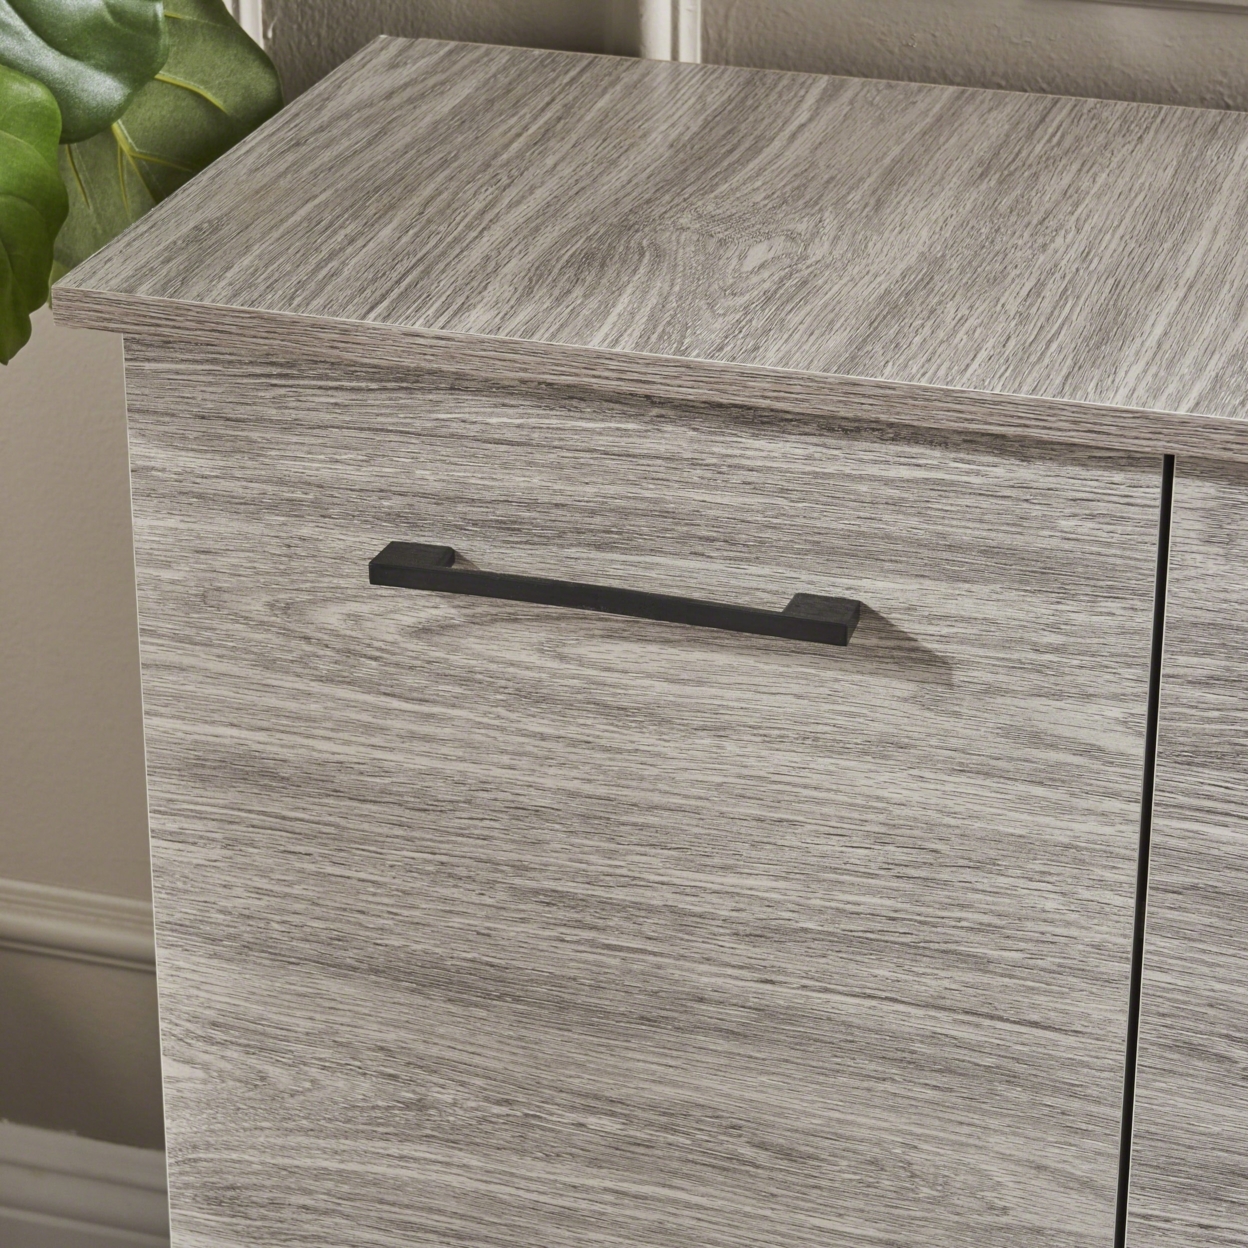 Emilia Mid Century Modern Finished Fiberboard Cabinet - Gray Oak